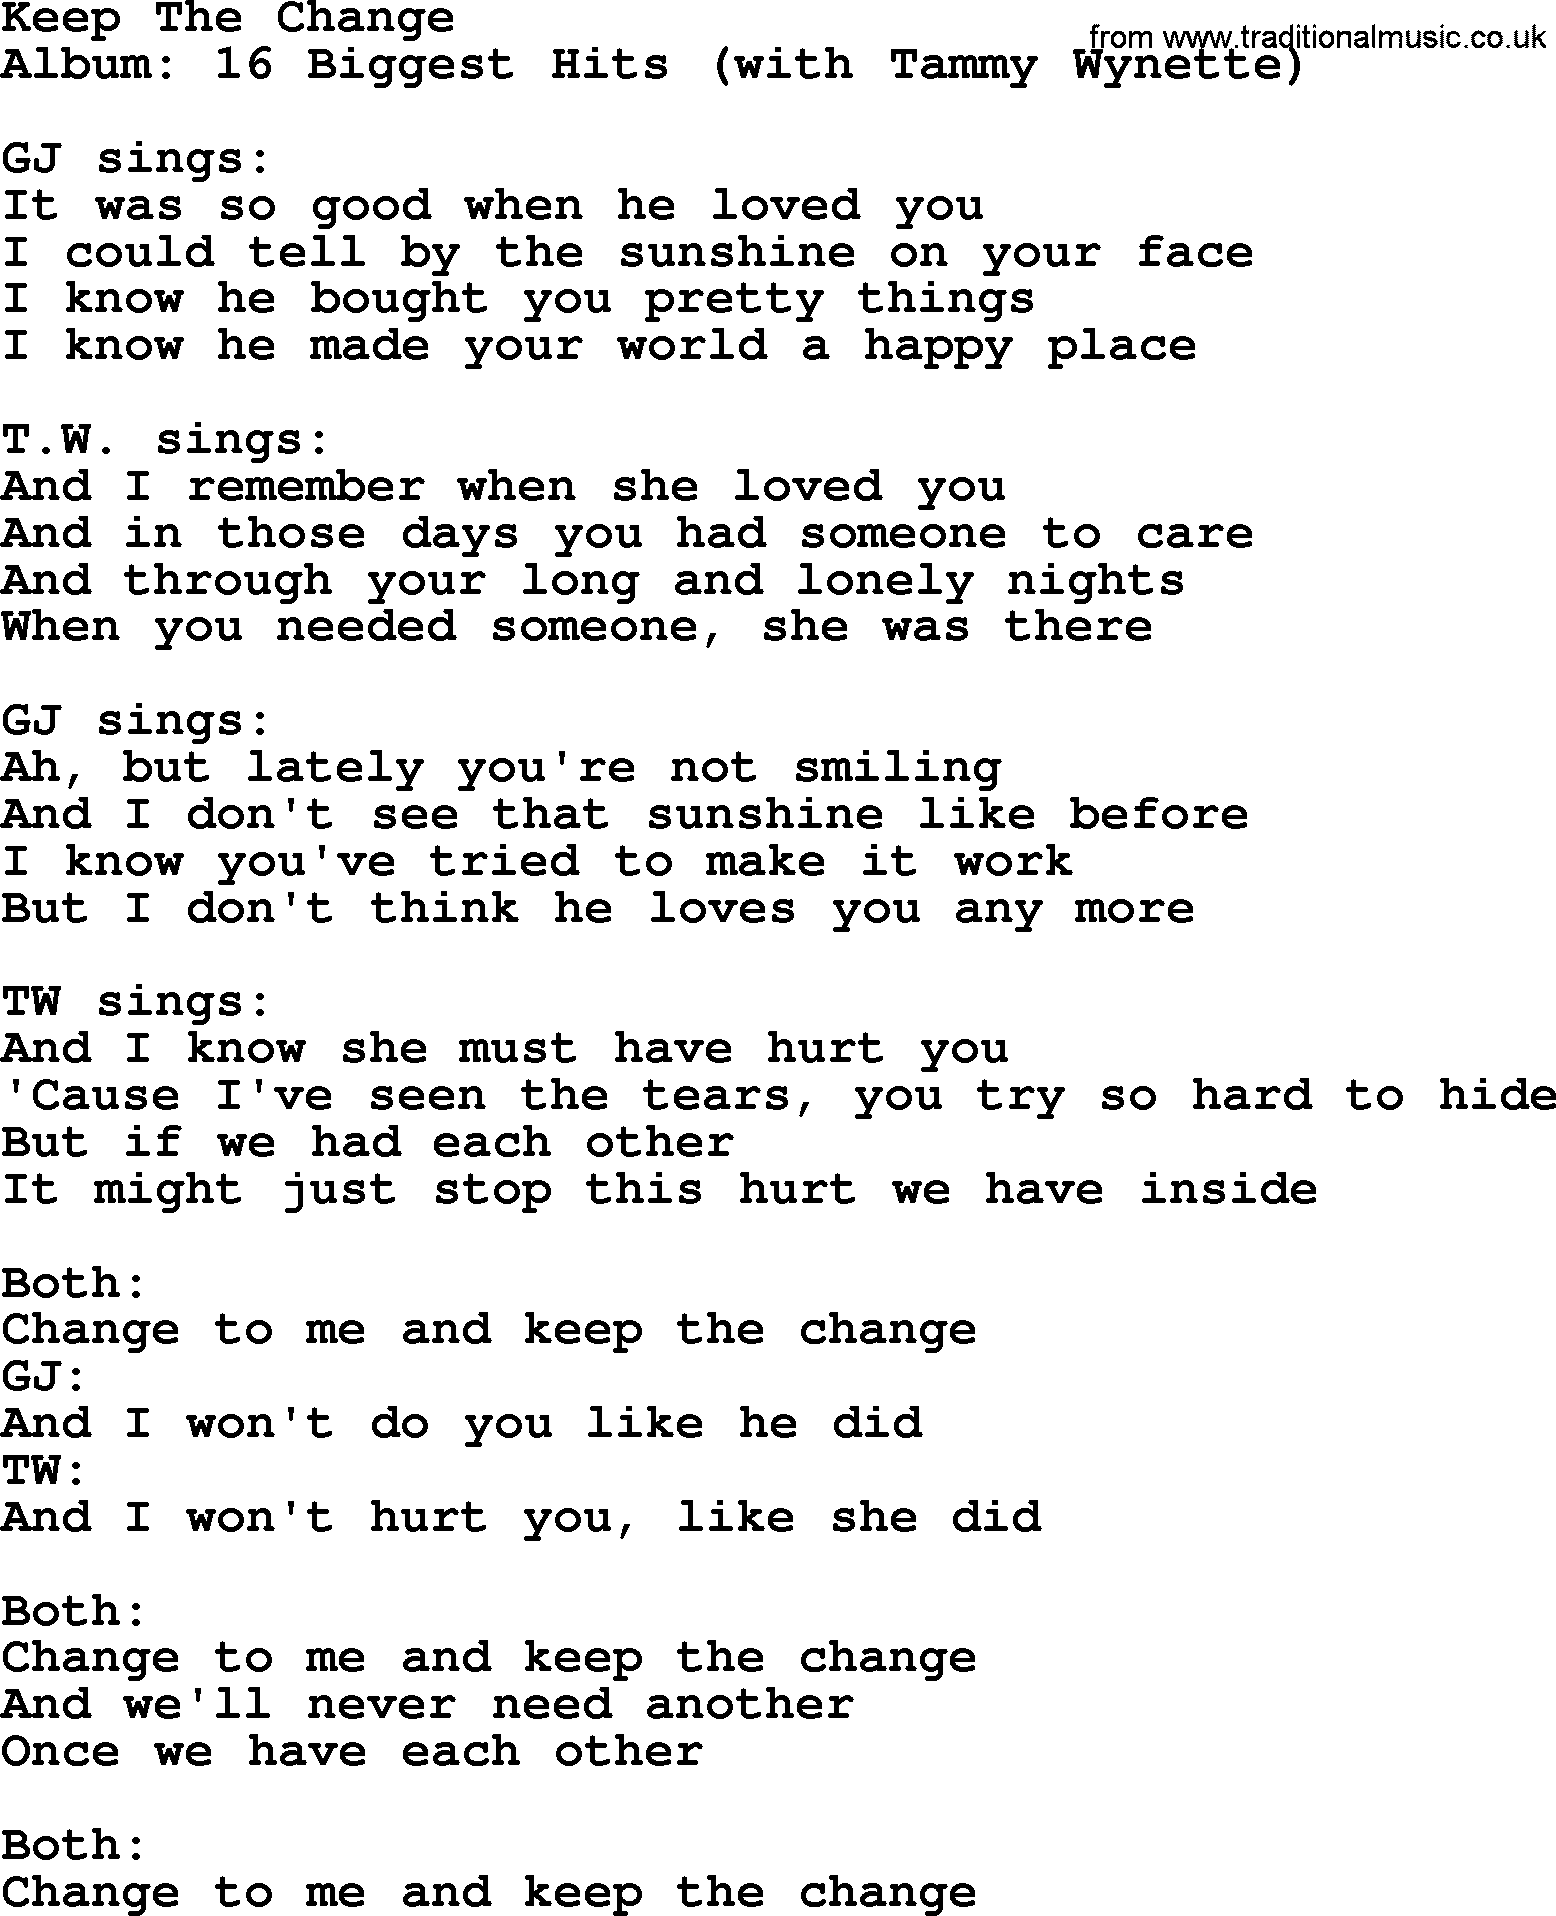 George Jones song: Keep The Change, lyrics